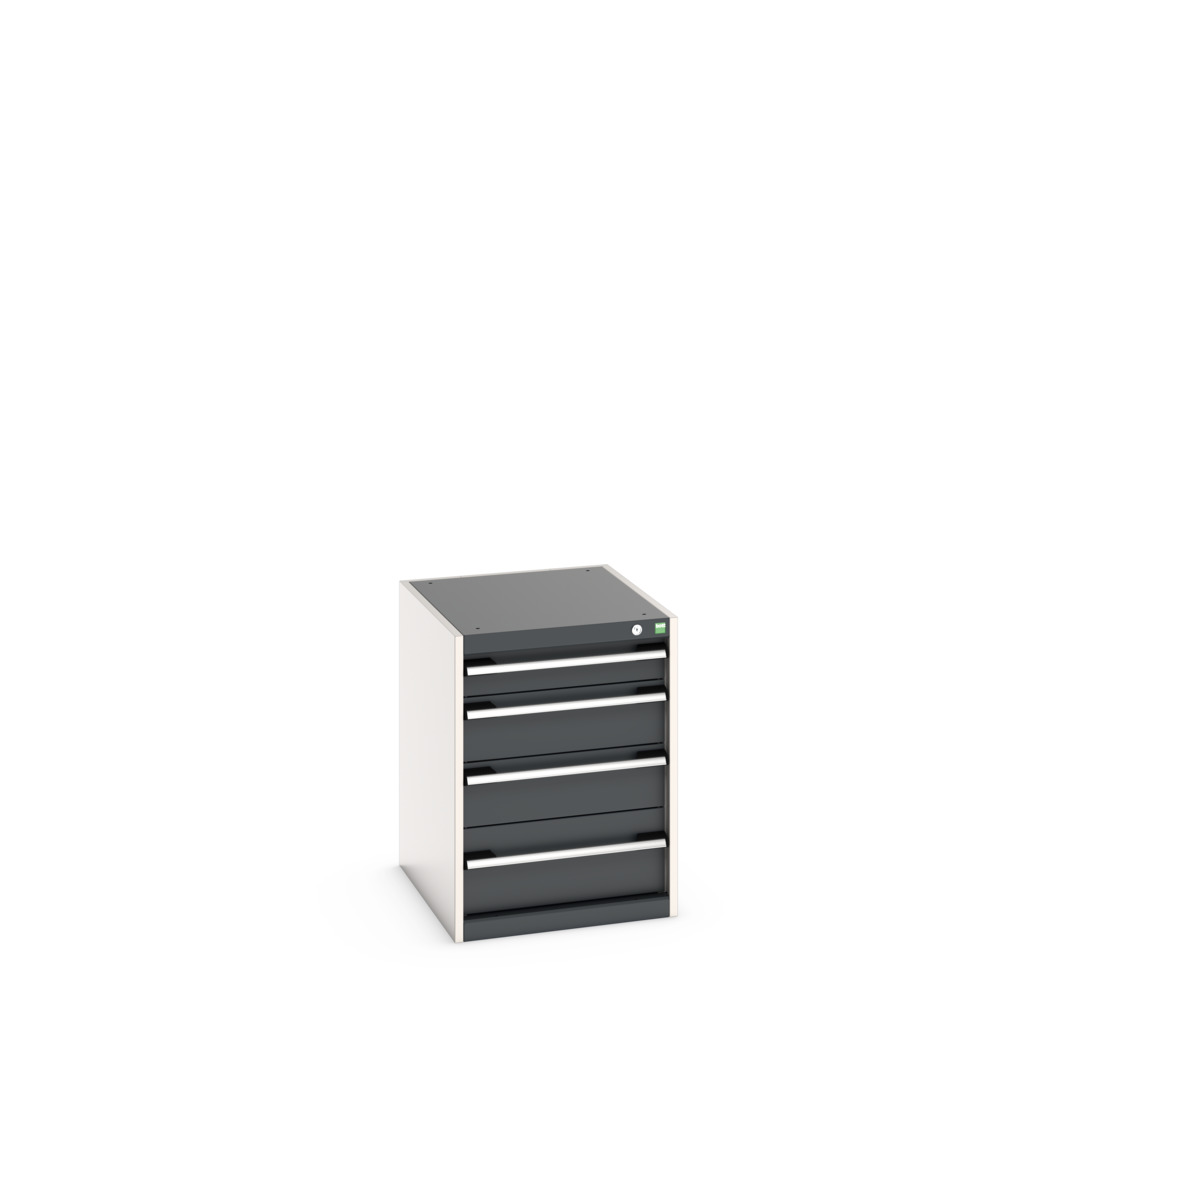 40018025. - cubio drawer cabinet